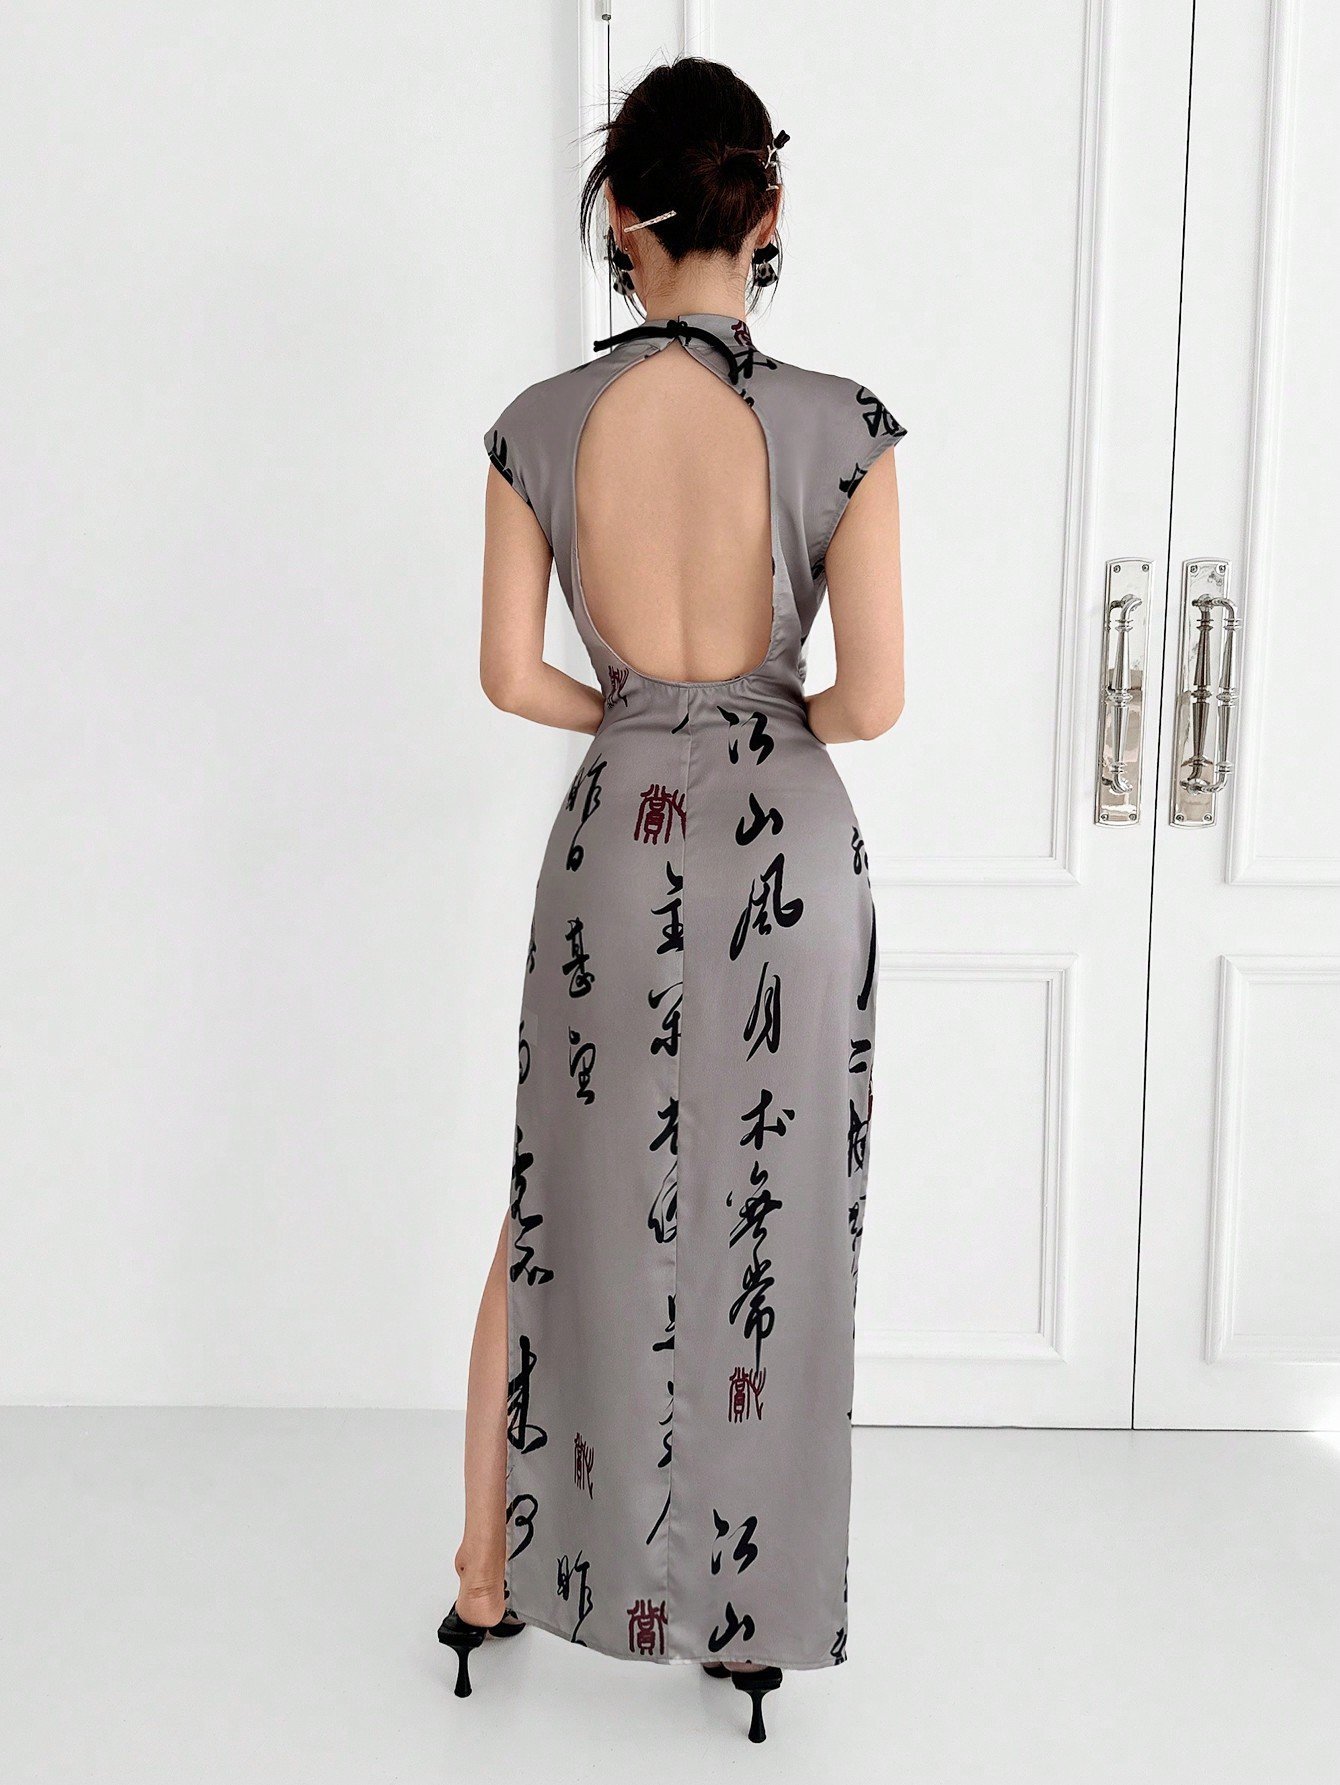 SHEIN Neu 新しい中国風のカラーブロックチャイナドレス、サテンプリント素材でバックレスになったデザイン、バックルの装飾